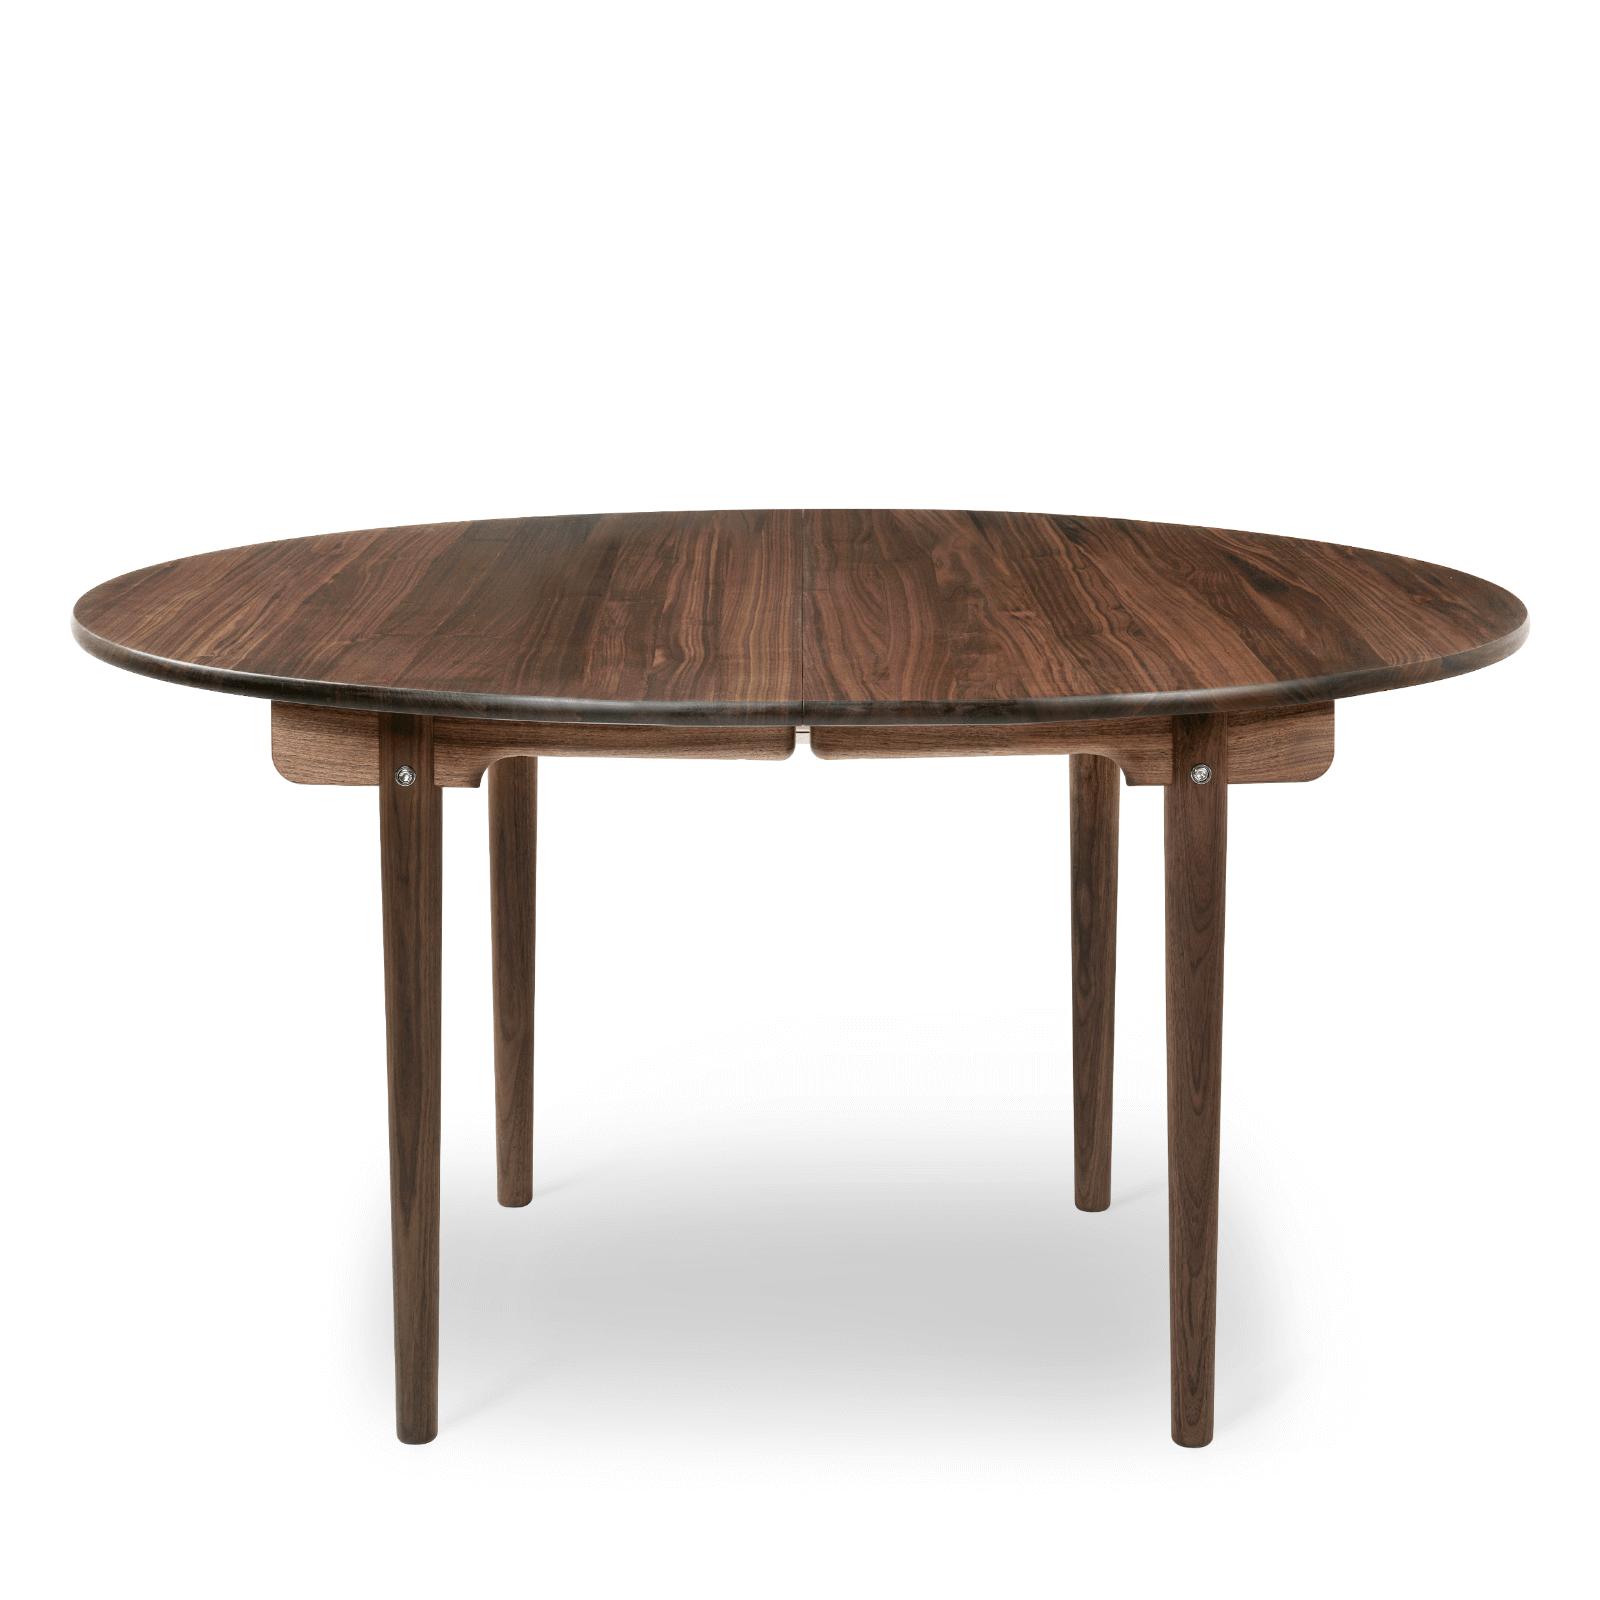 Carl Hansen Son Ch337 Dining Table Walnut Oil No Extension Designer Furniture From Holloways Of Ludlow